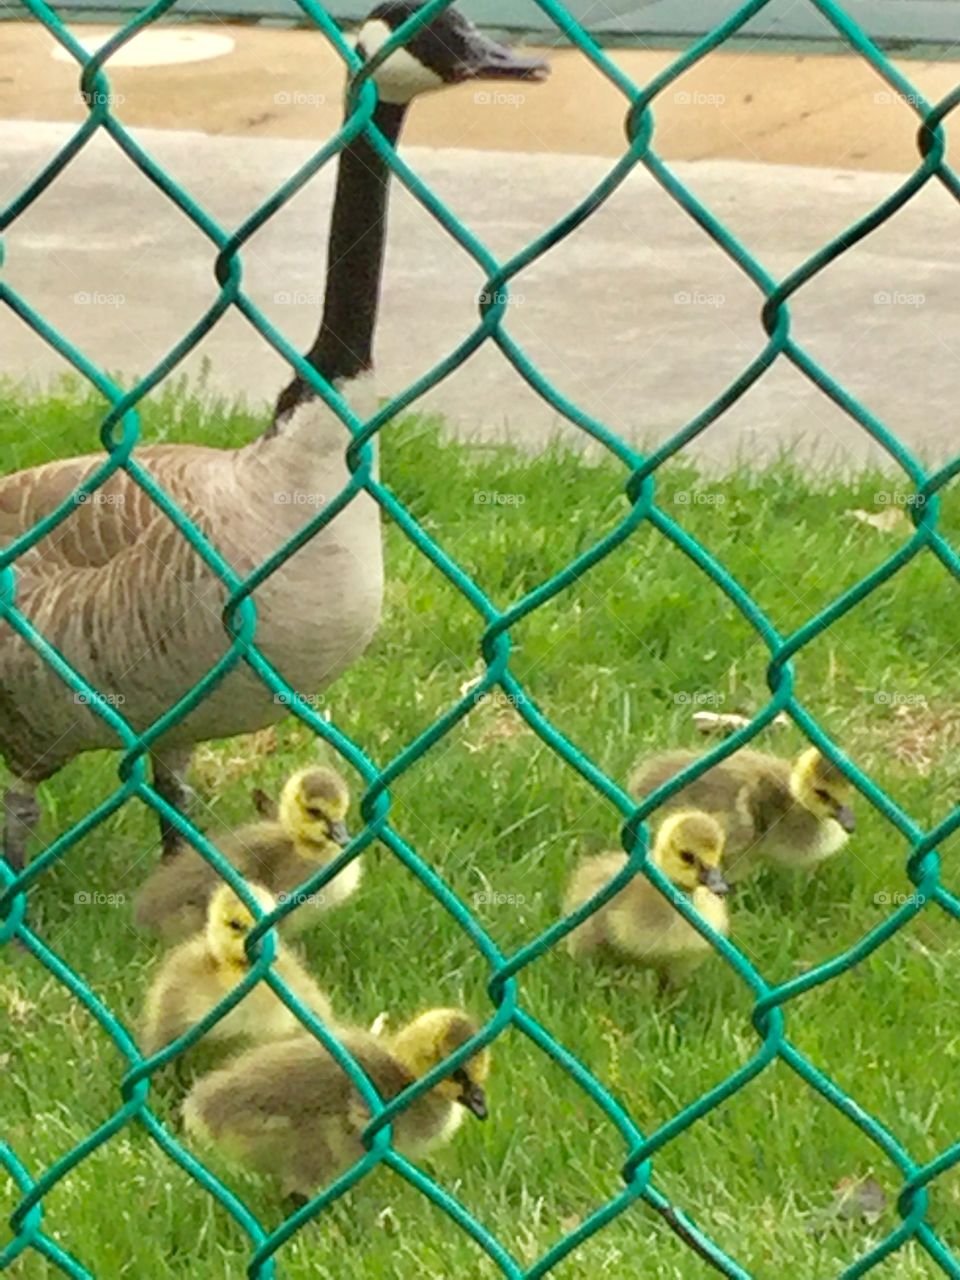 Canada Geese family enjoying spring time 